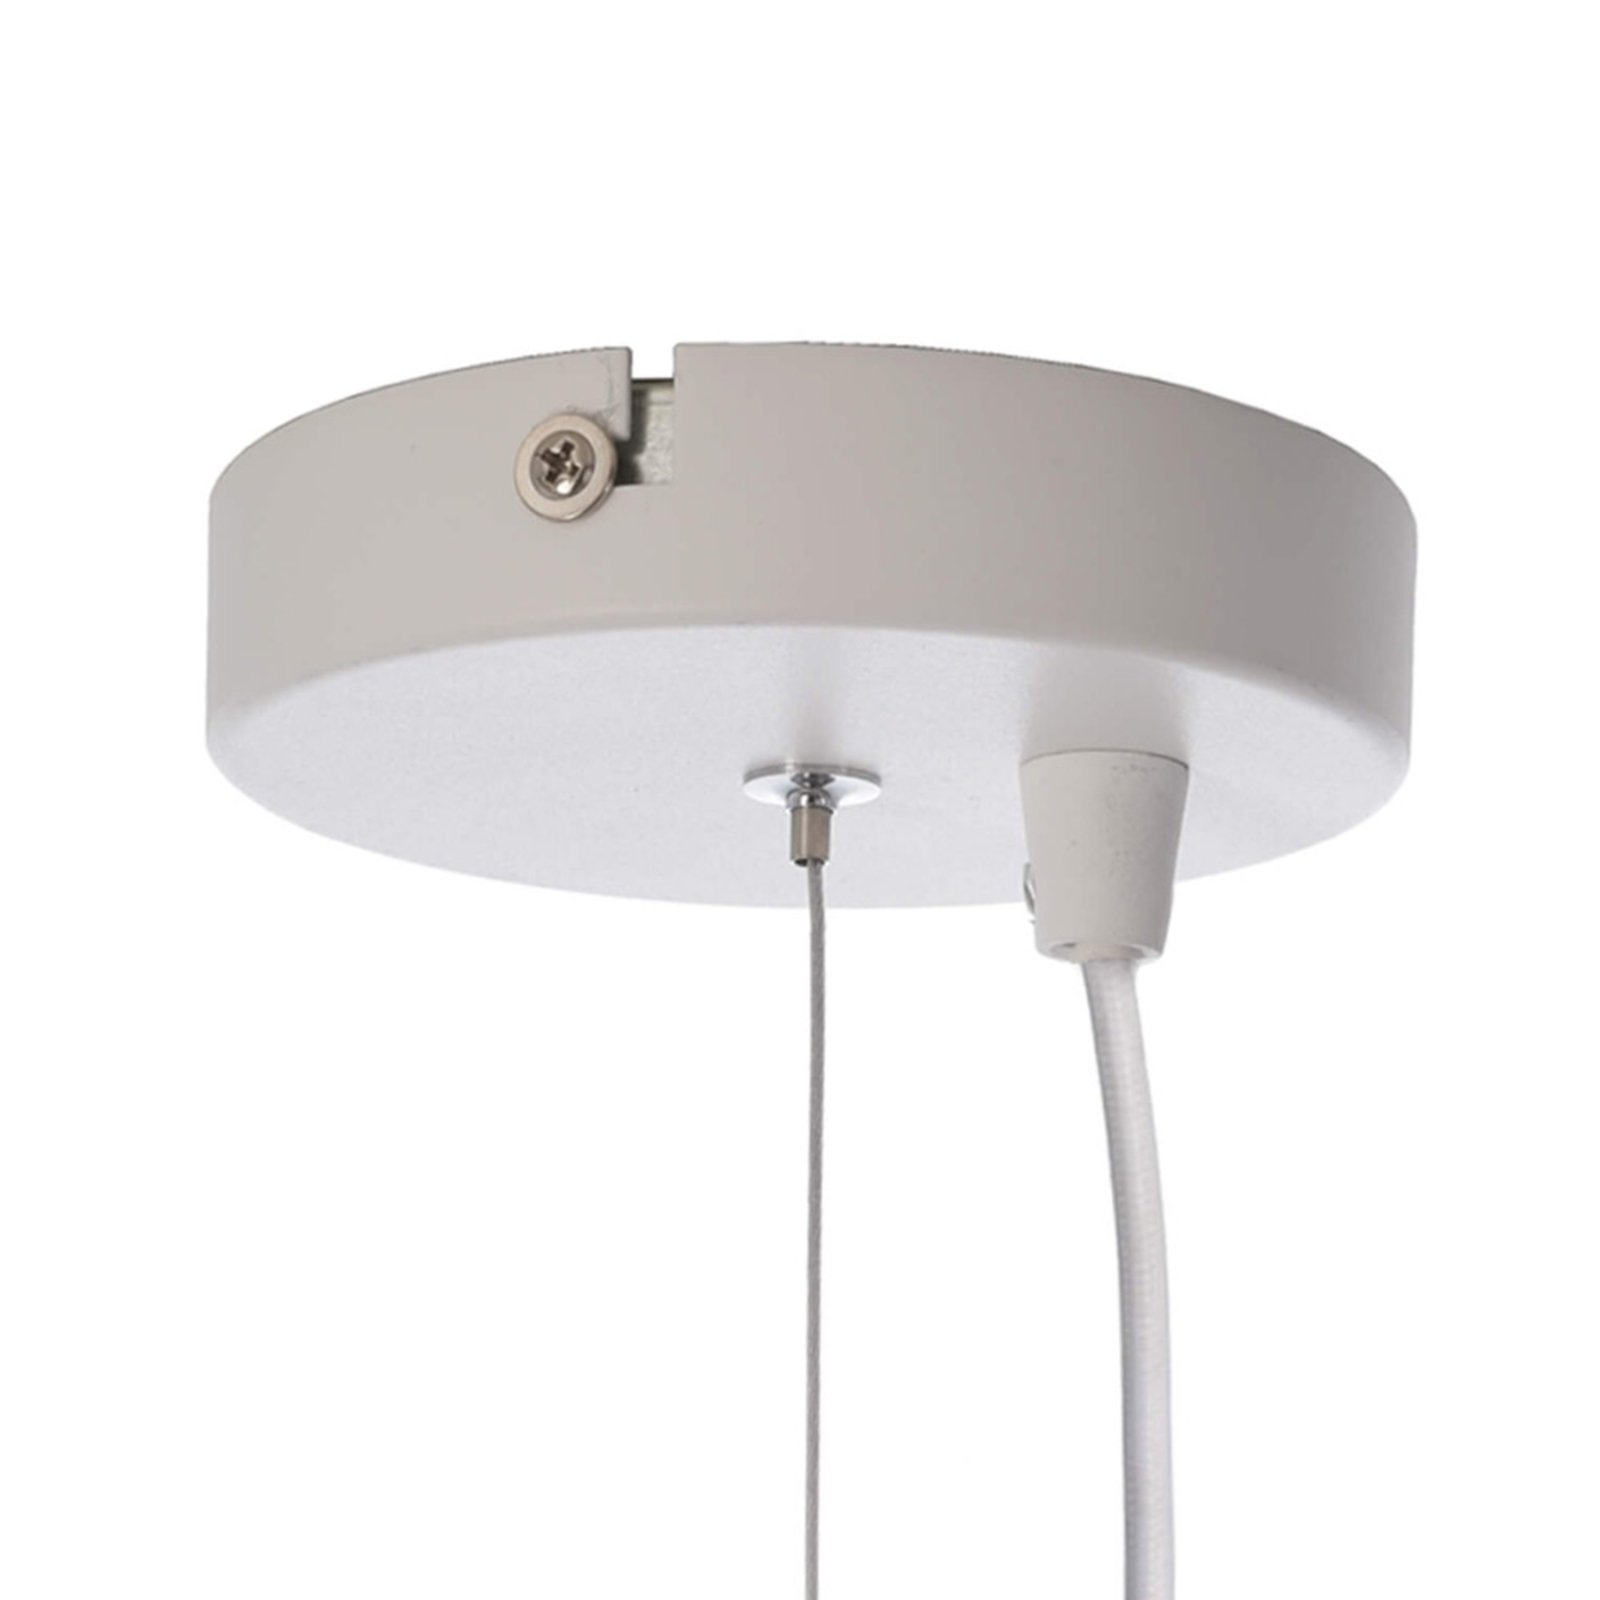 Asterope pendant light, Ø 50cm round, white